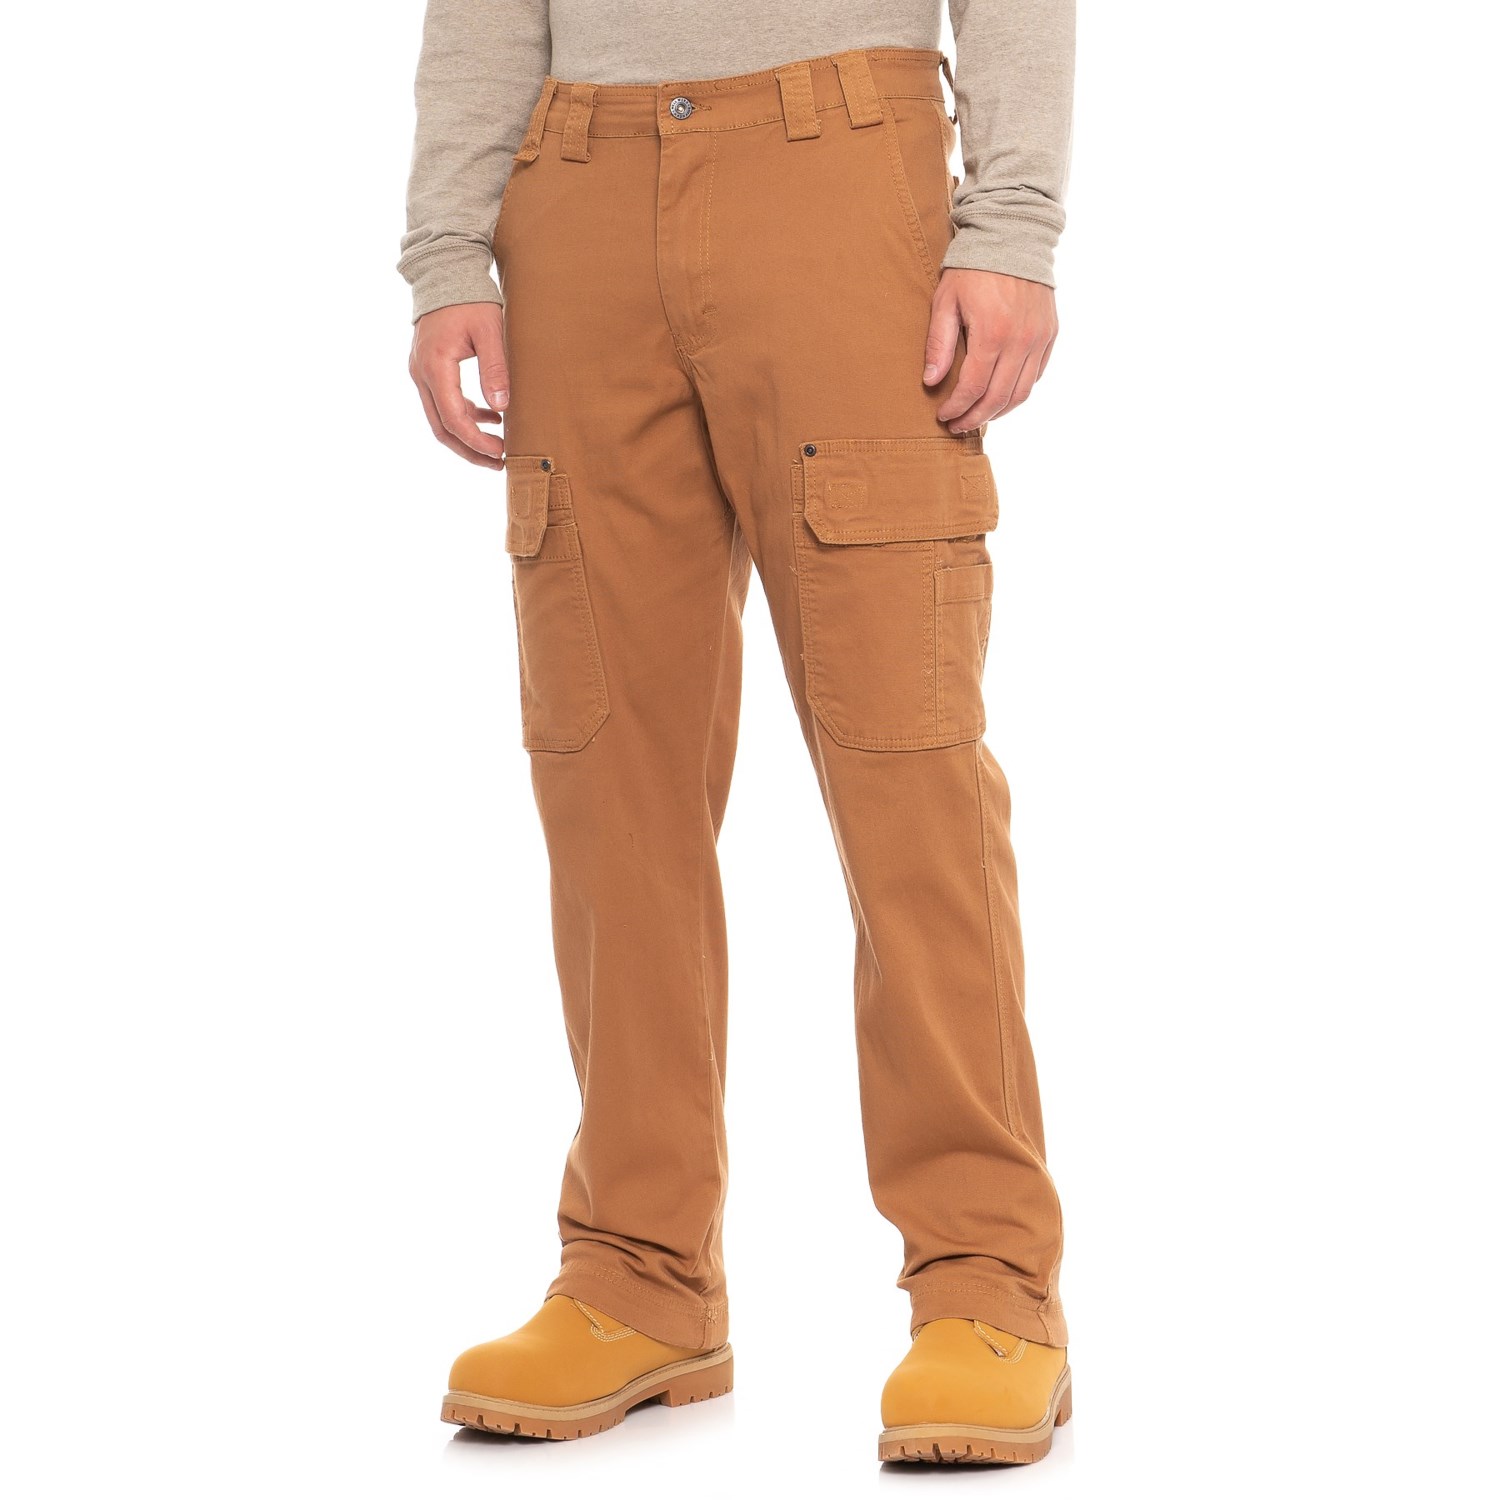 Ruff Hewn Flex Canvas Utility Cargo Pants (For Men) - Save 42%